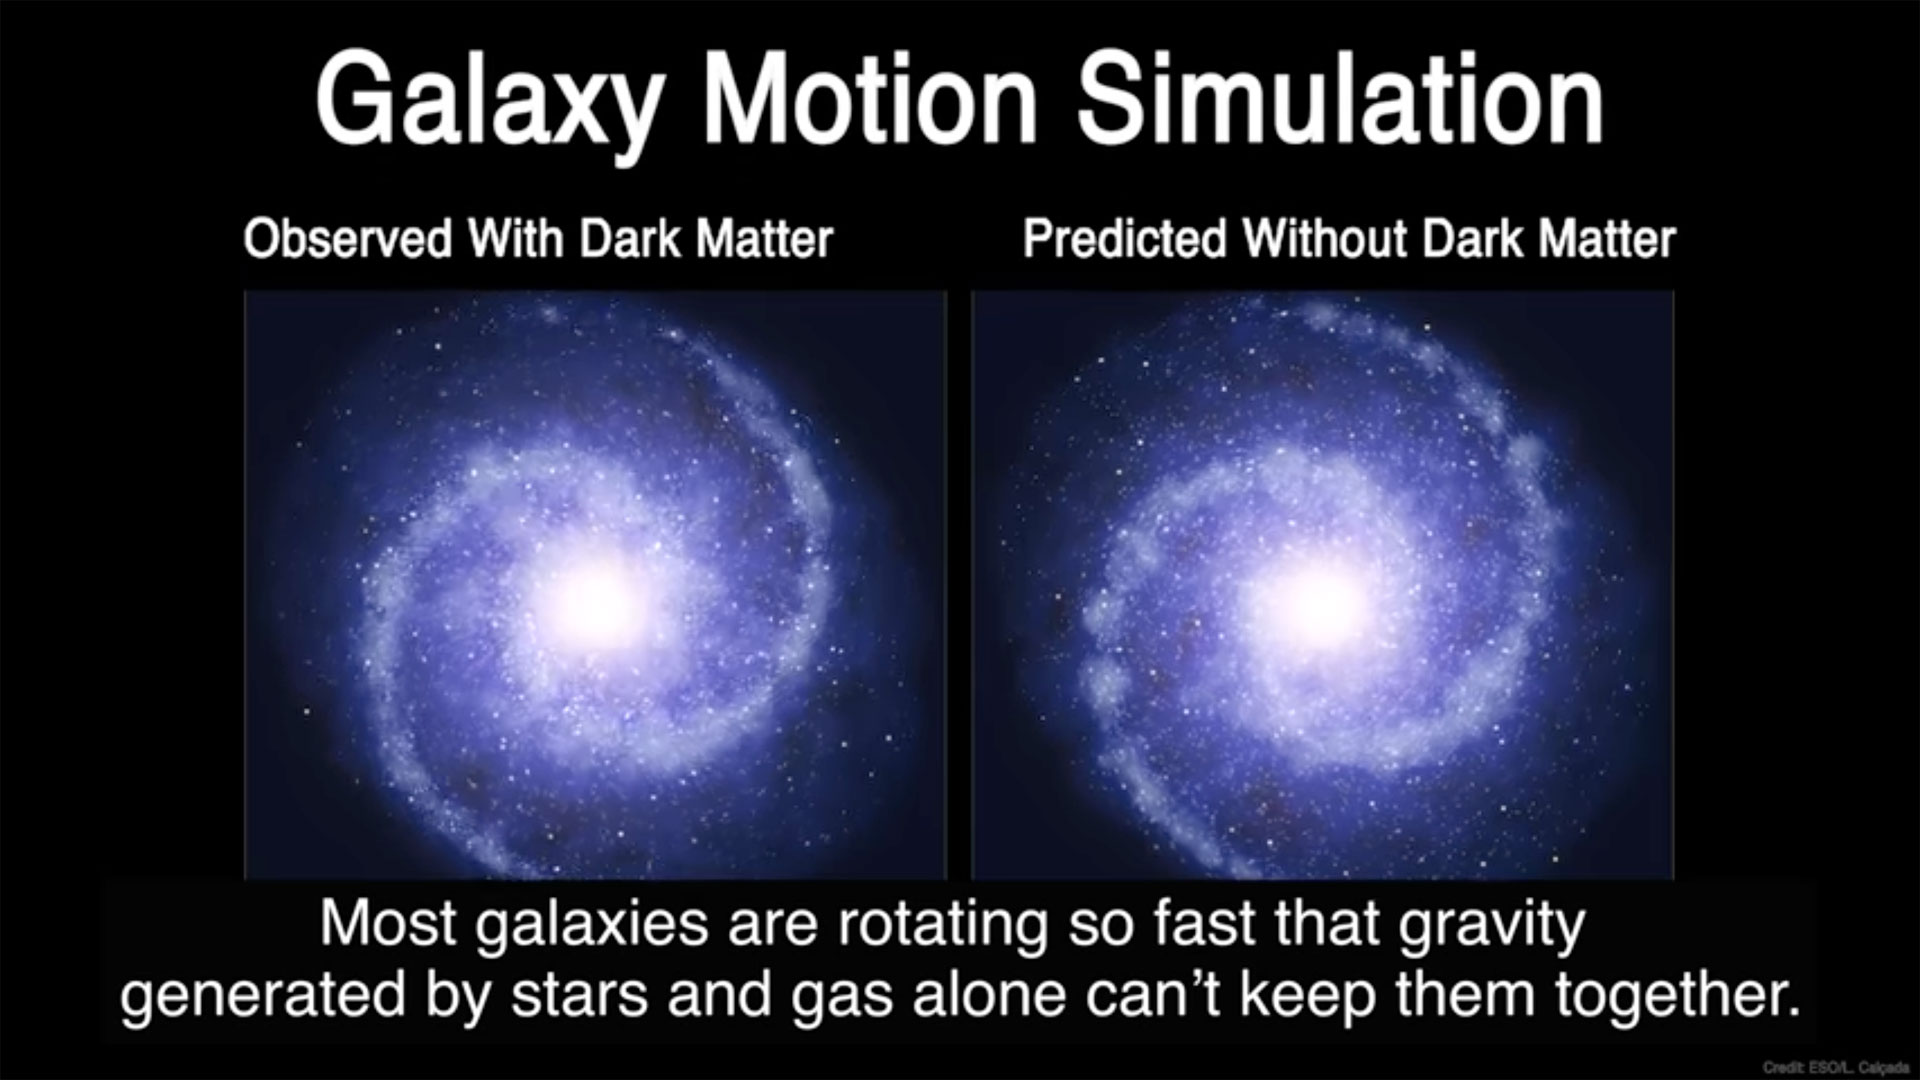 Galactic motion